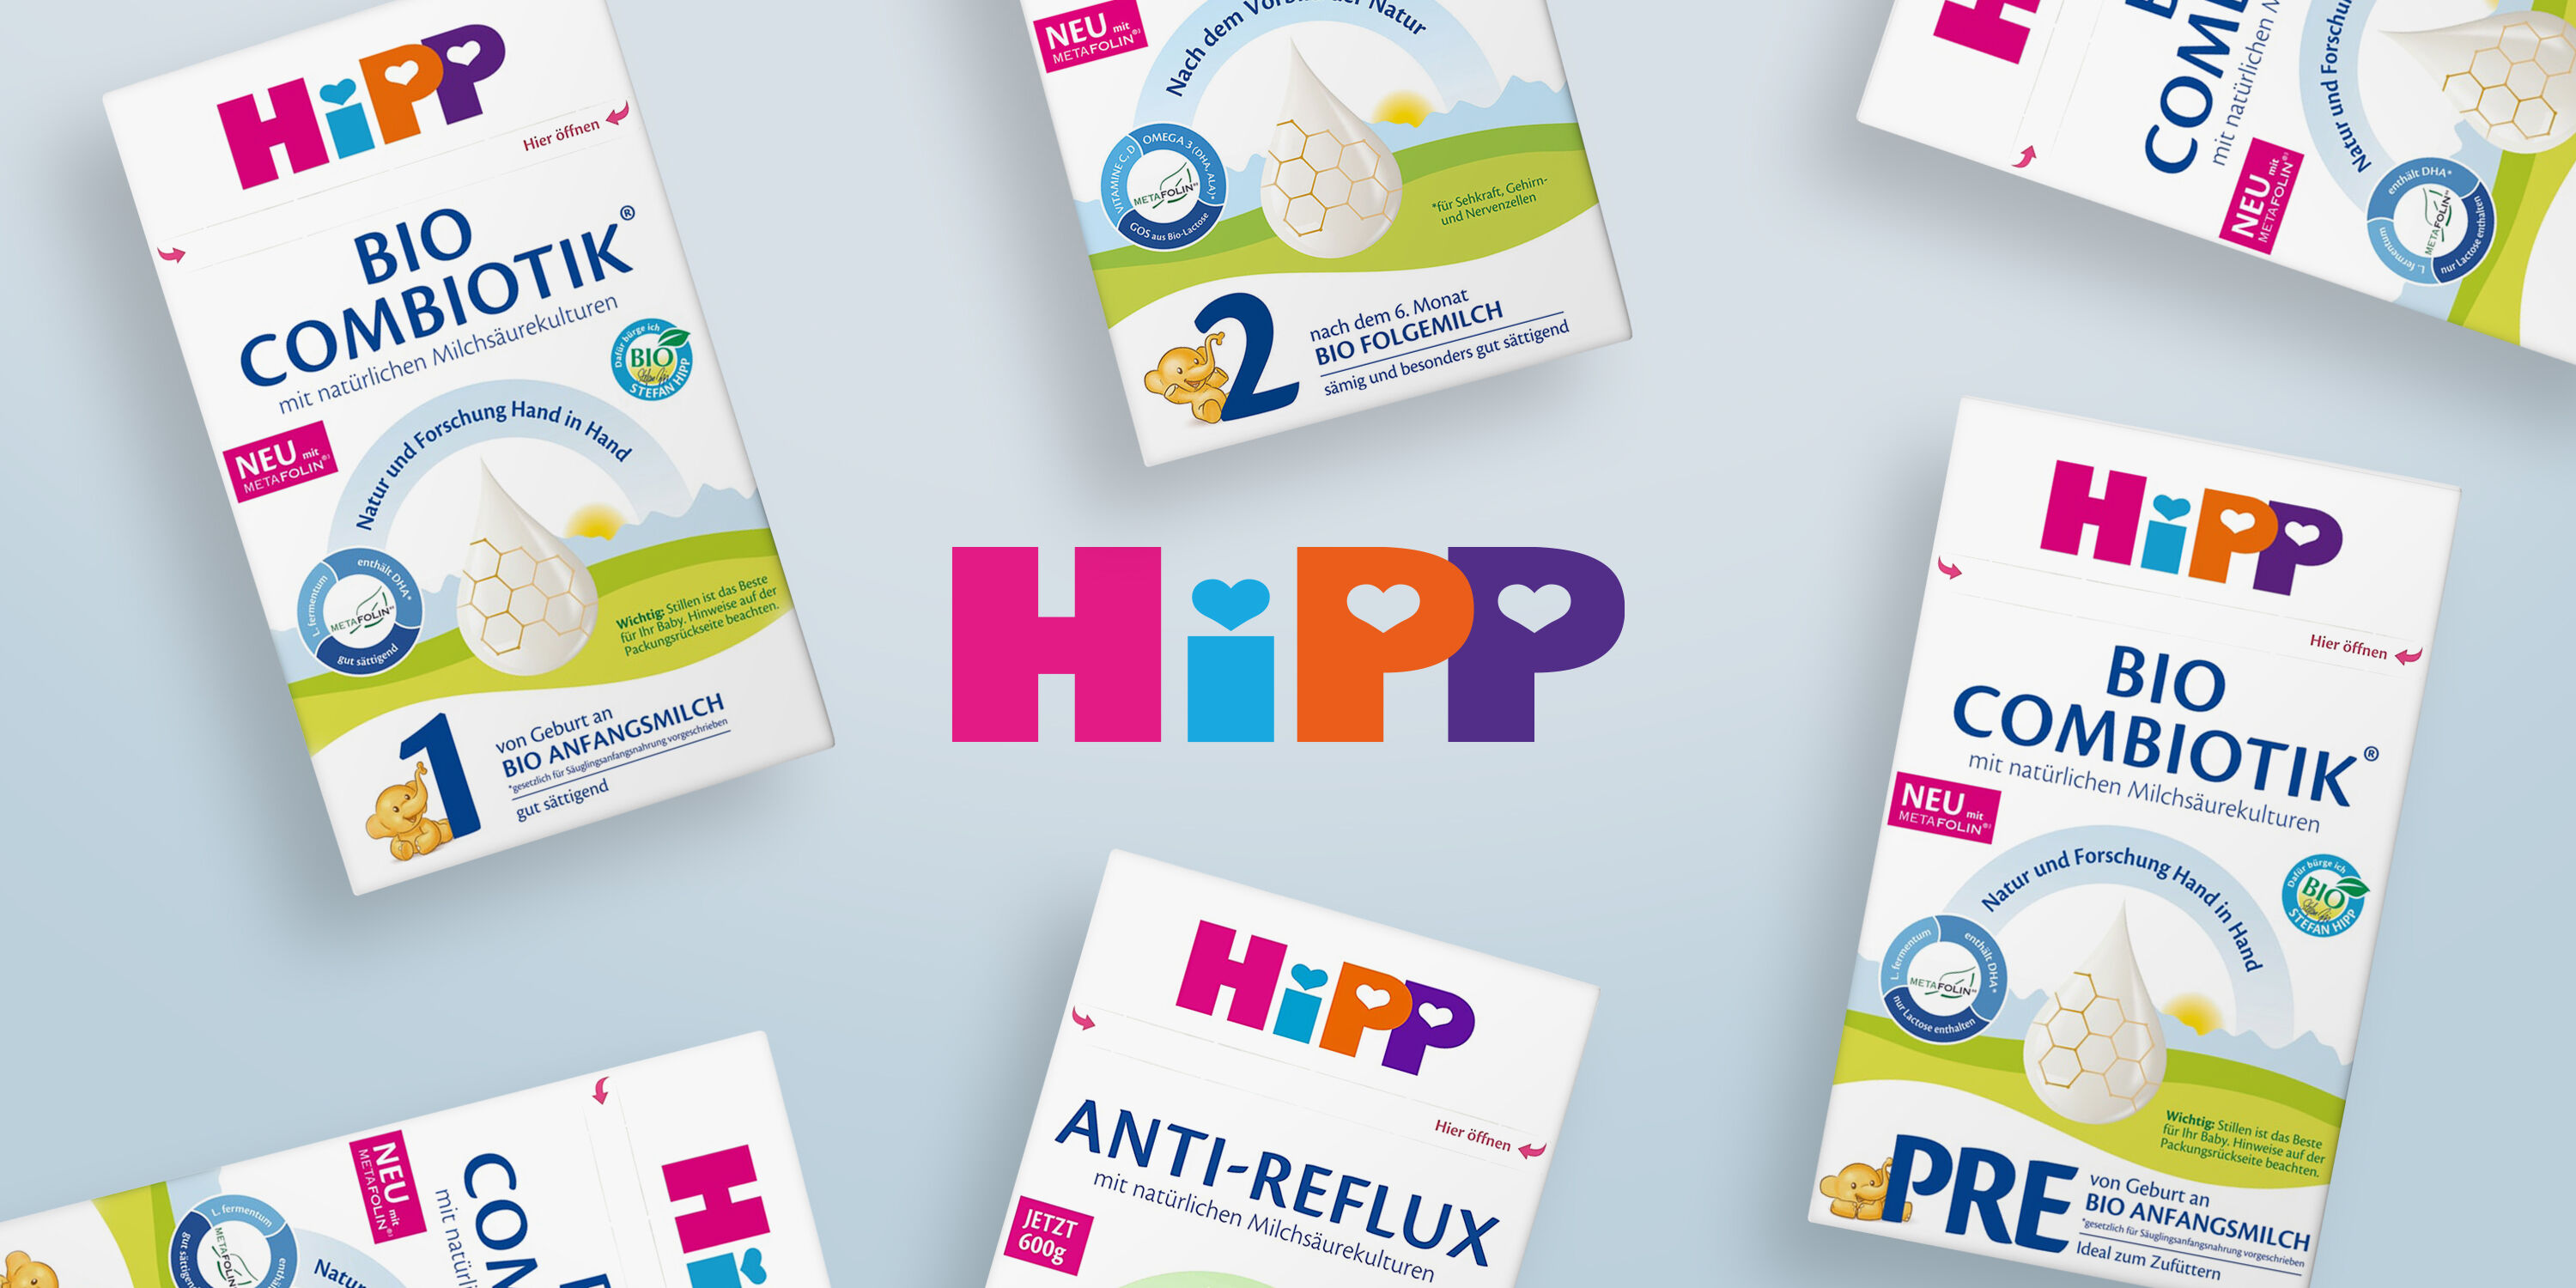 HiPP HA Follow-On Baby Milk Formula Vita Combiotik 2 from Europe